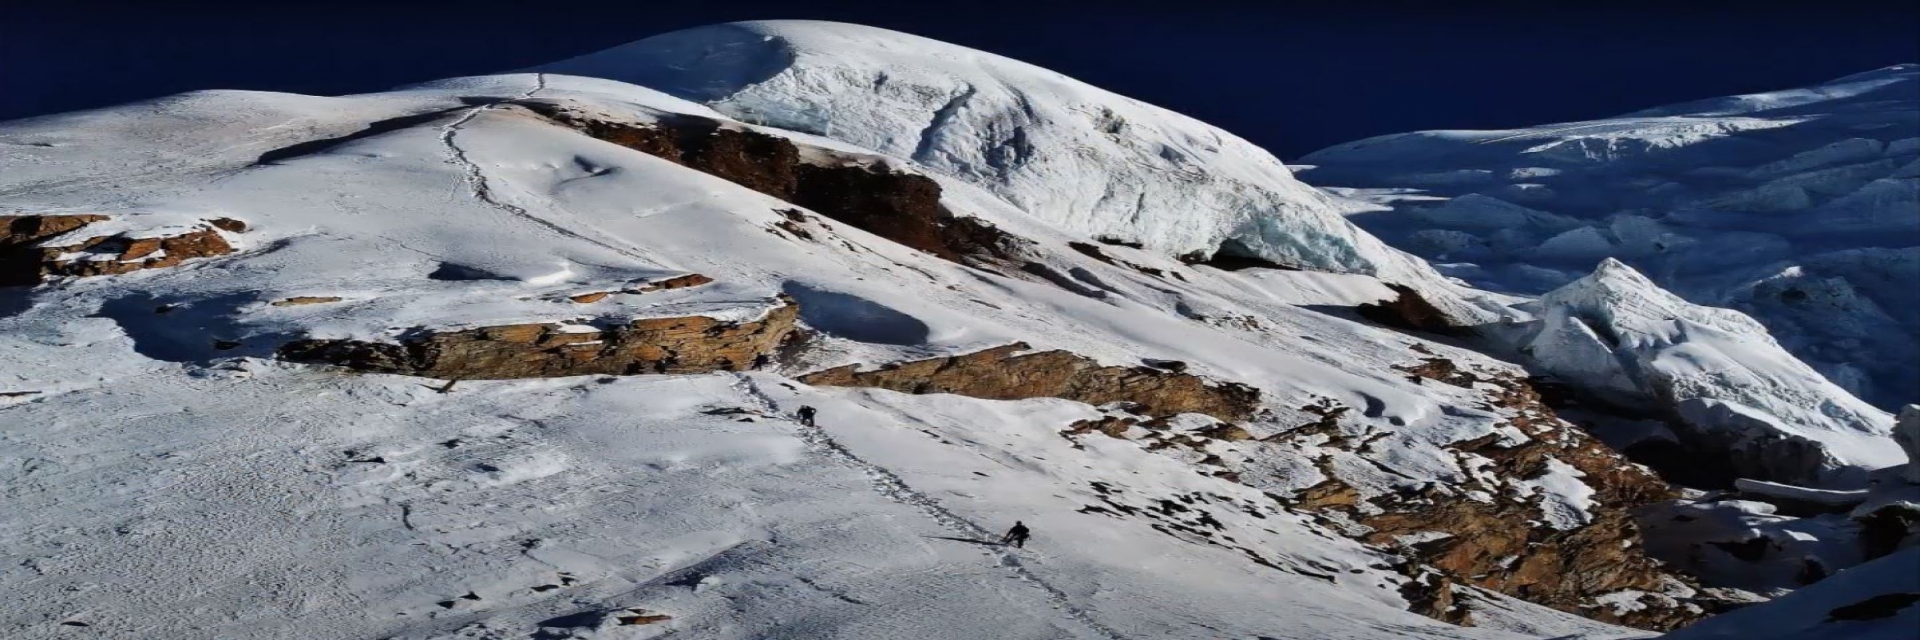 Pisang Peak Climbing (6091 m) - 18 Days Itinerary, Cost, Map, Best Season